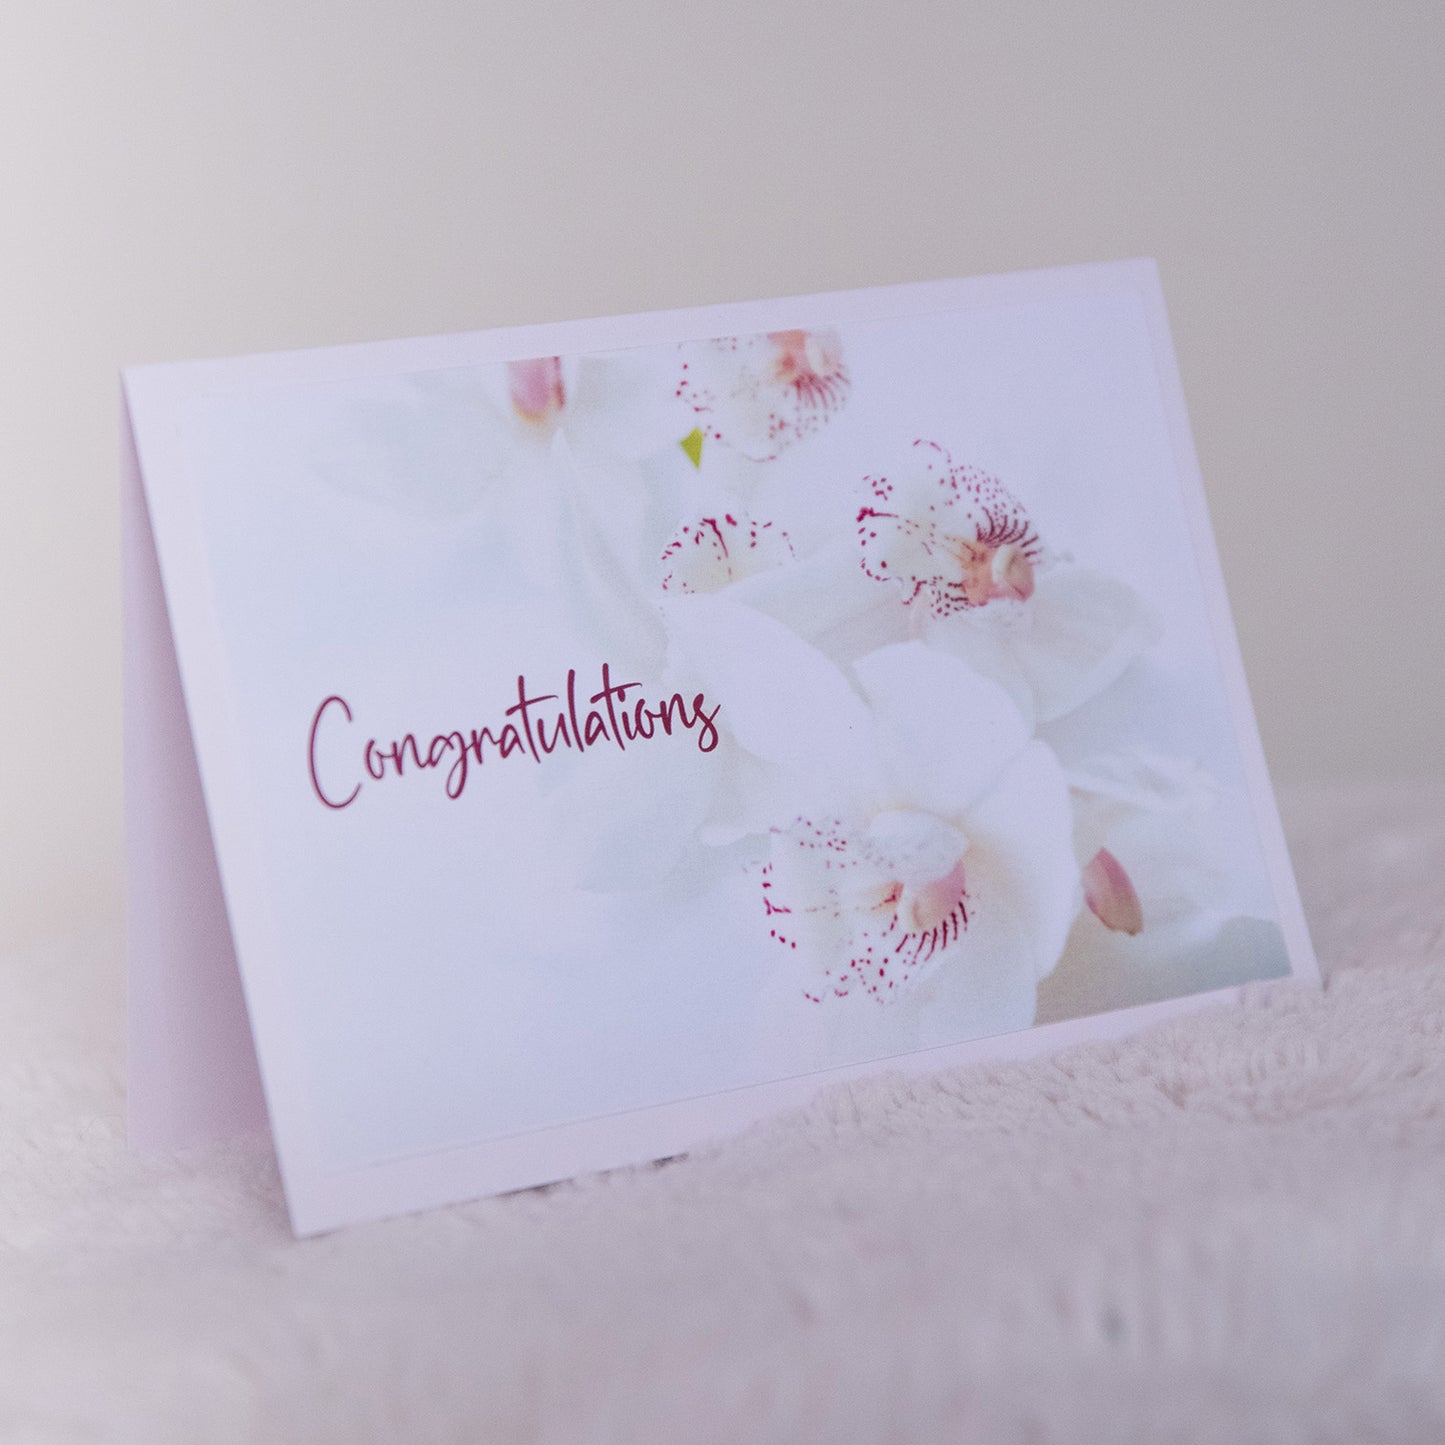 “Congrats” greeting card